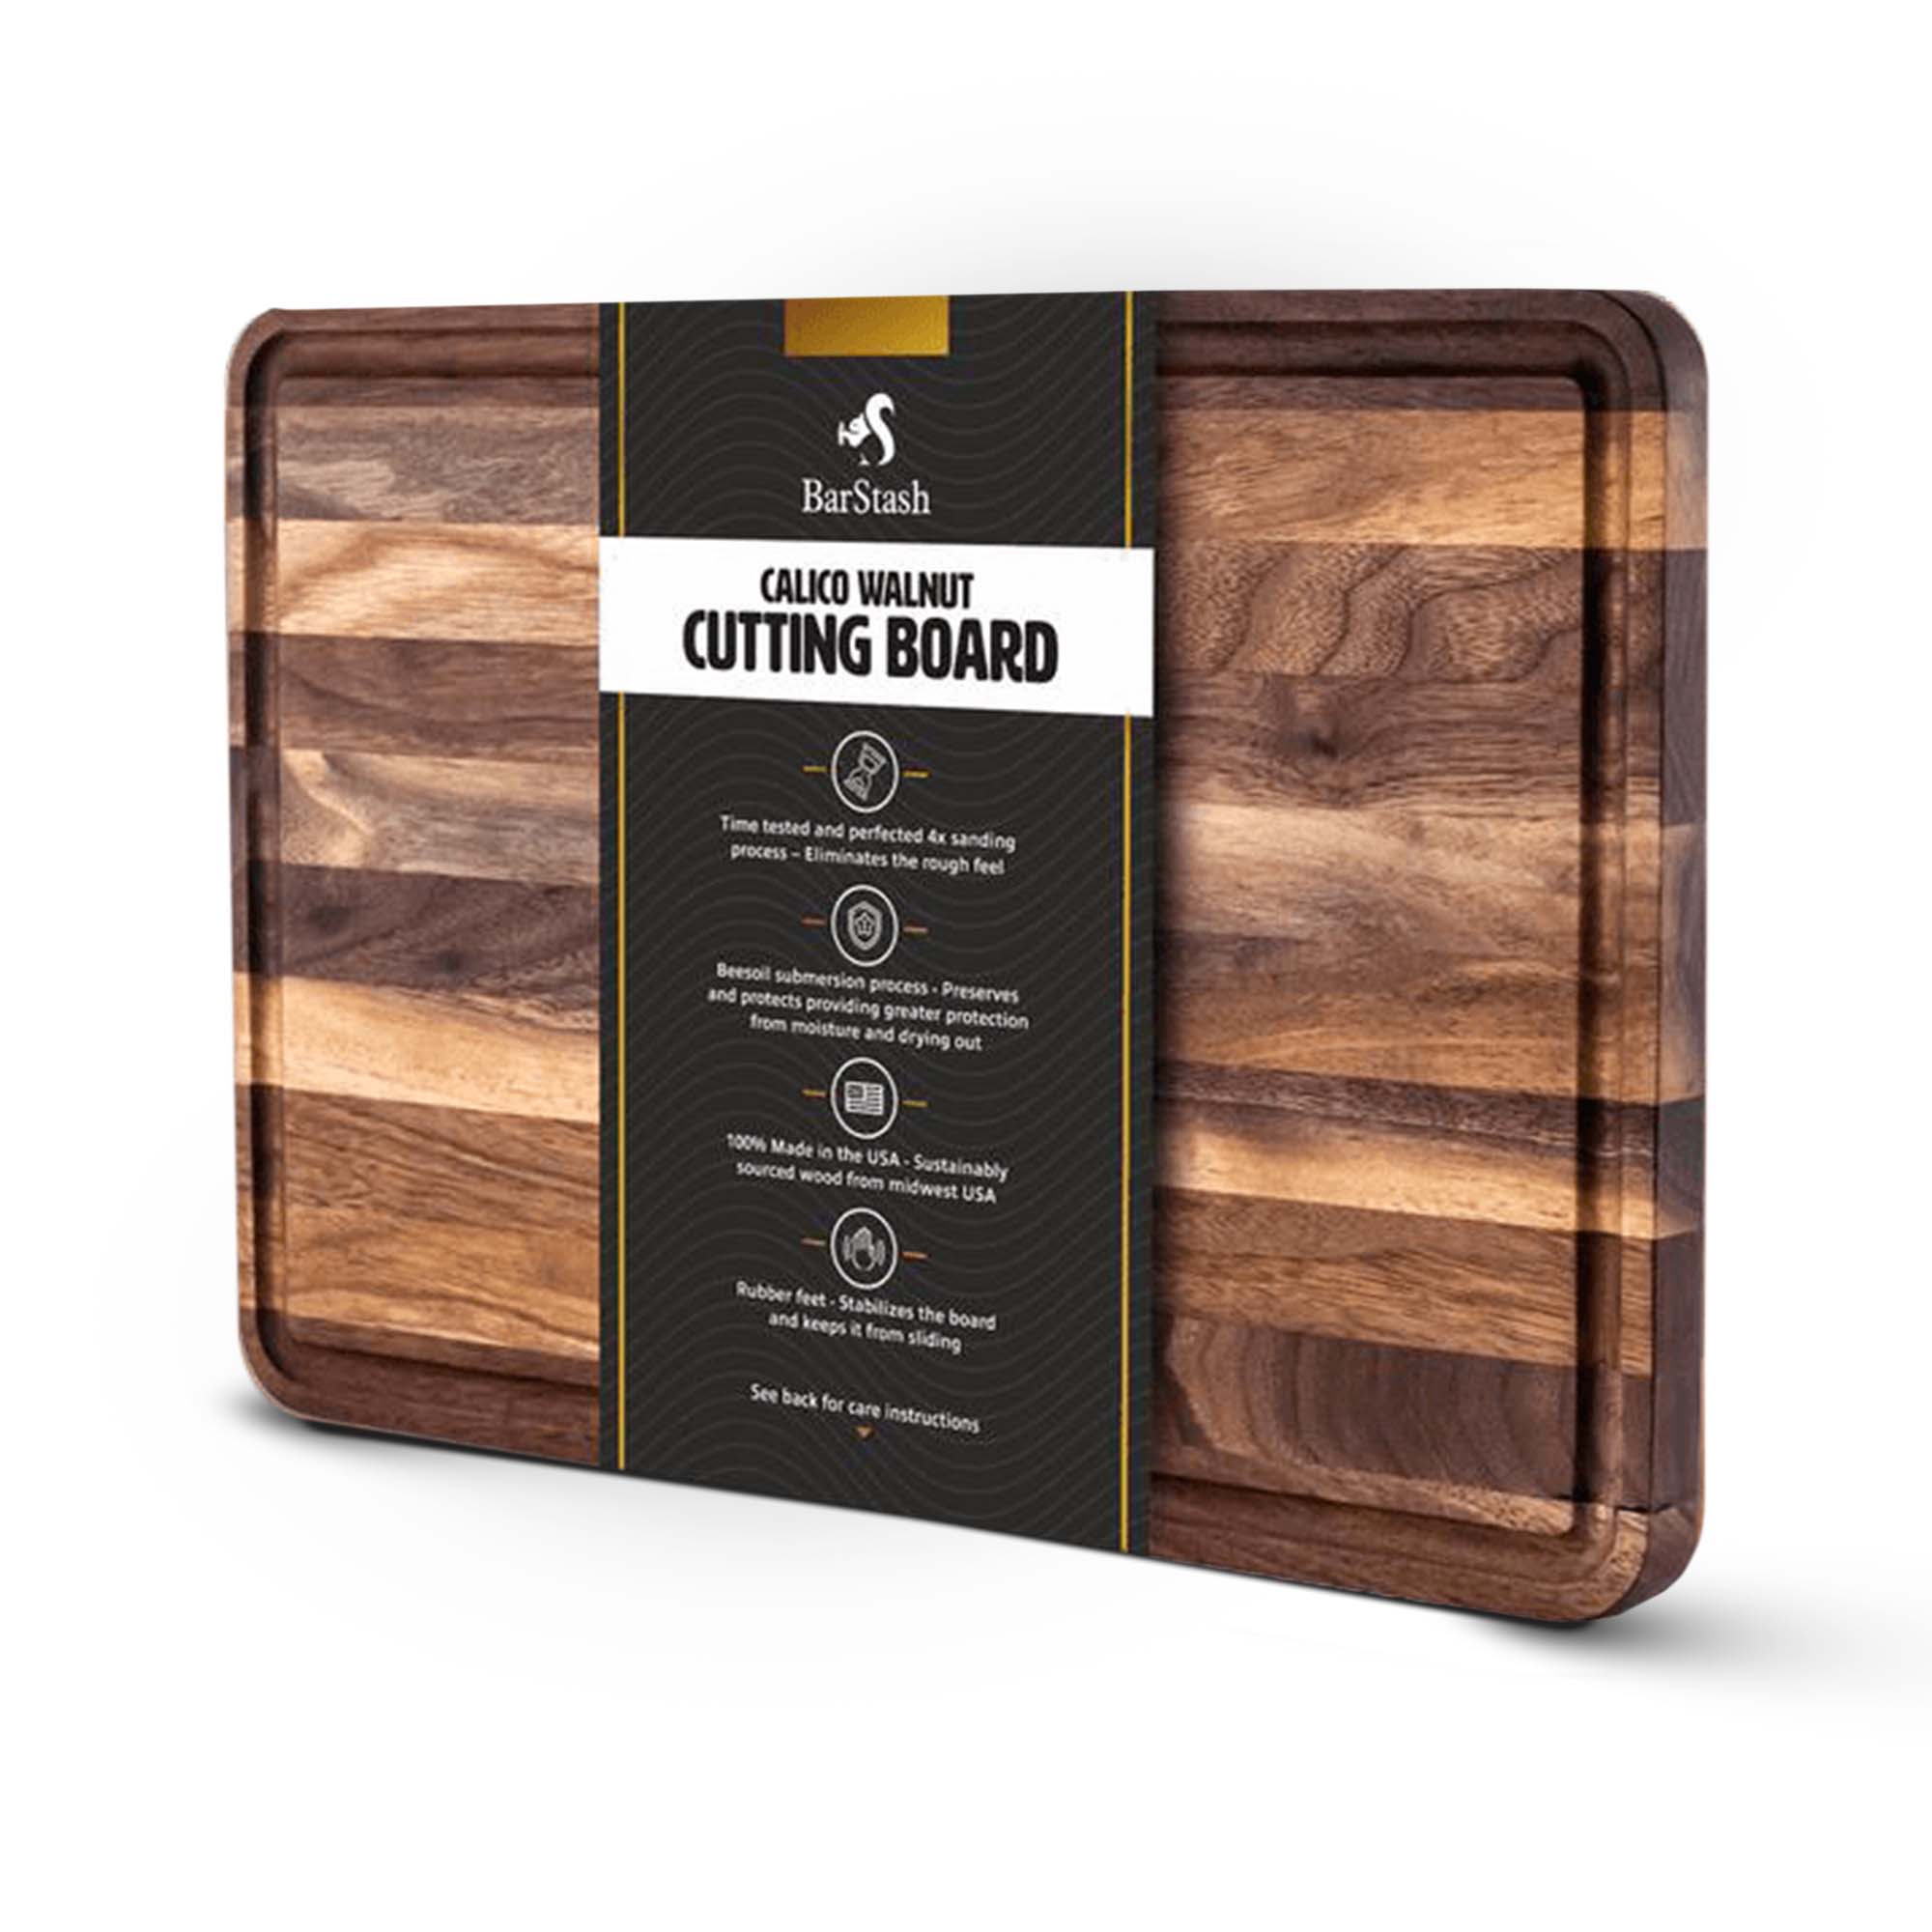 BarStash's Premium Wooden Cutting Board